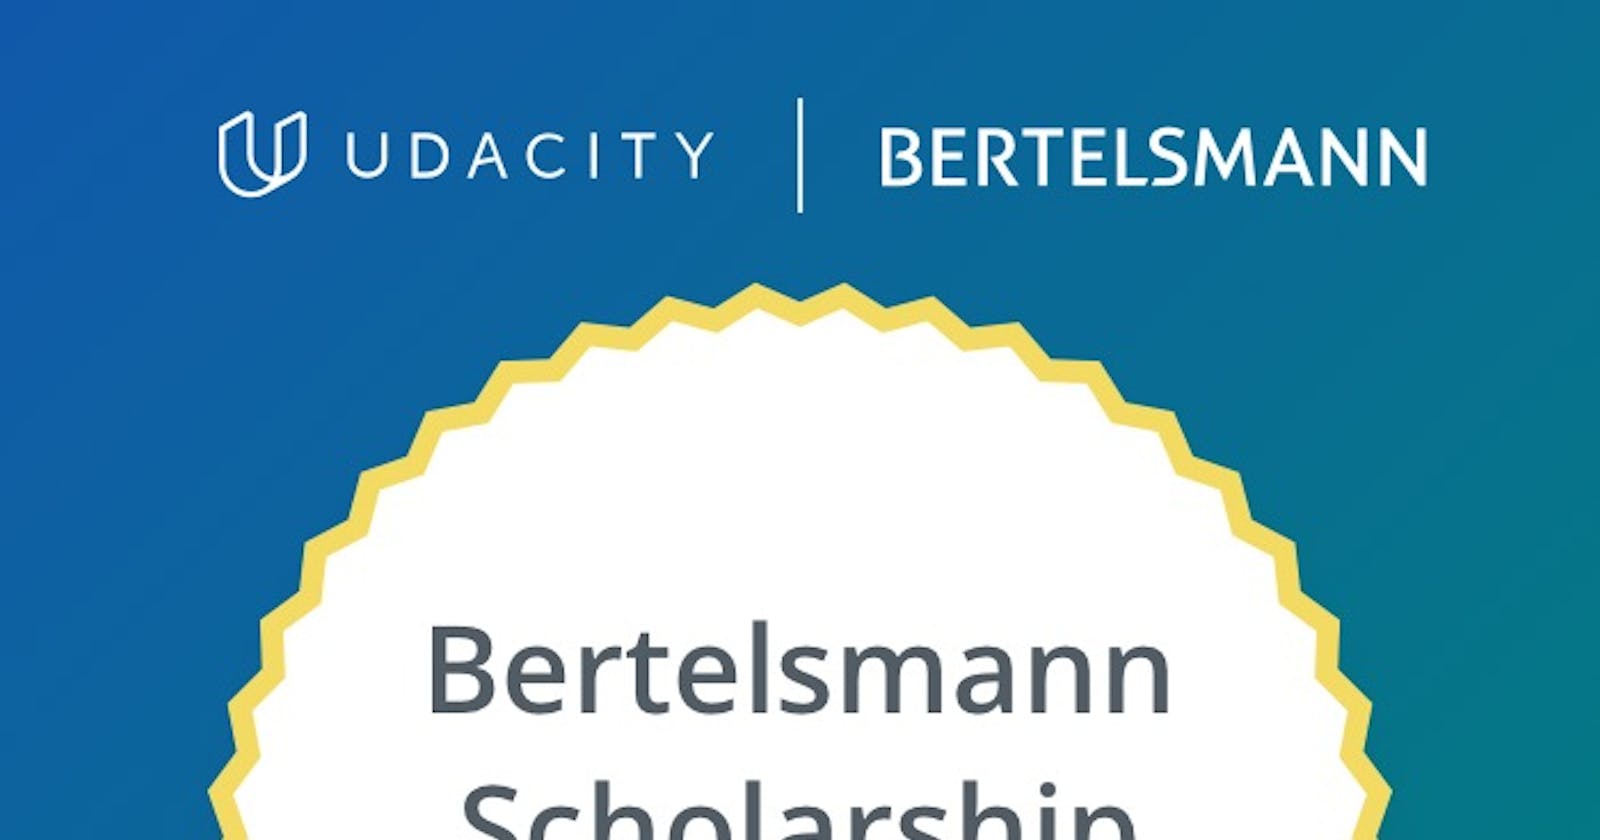 Getting Udacity Bertelsmann Scholarship !!